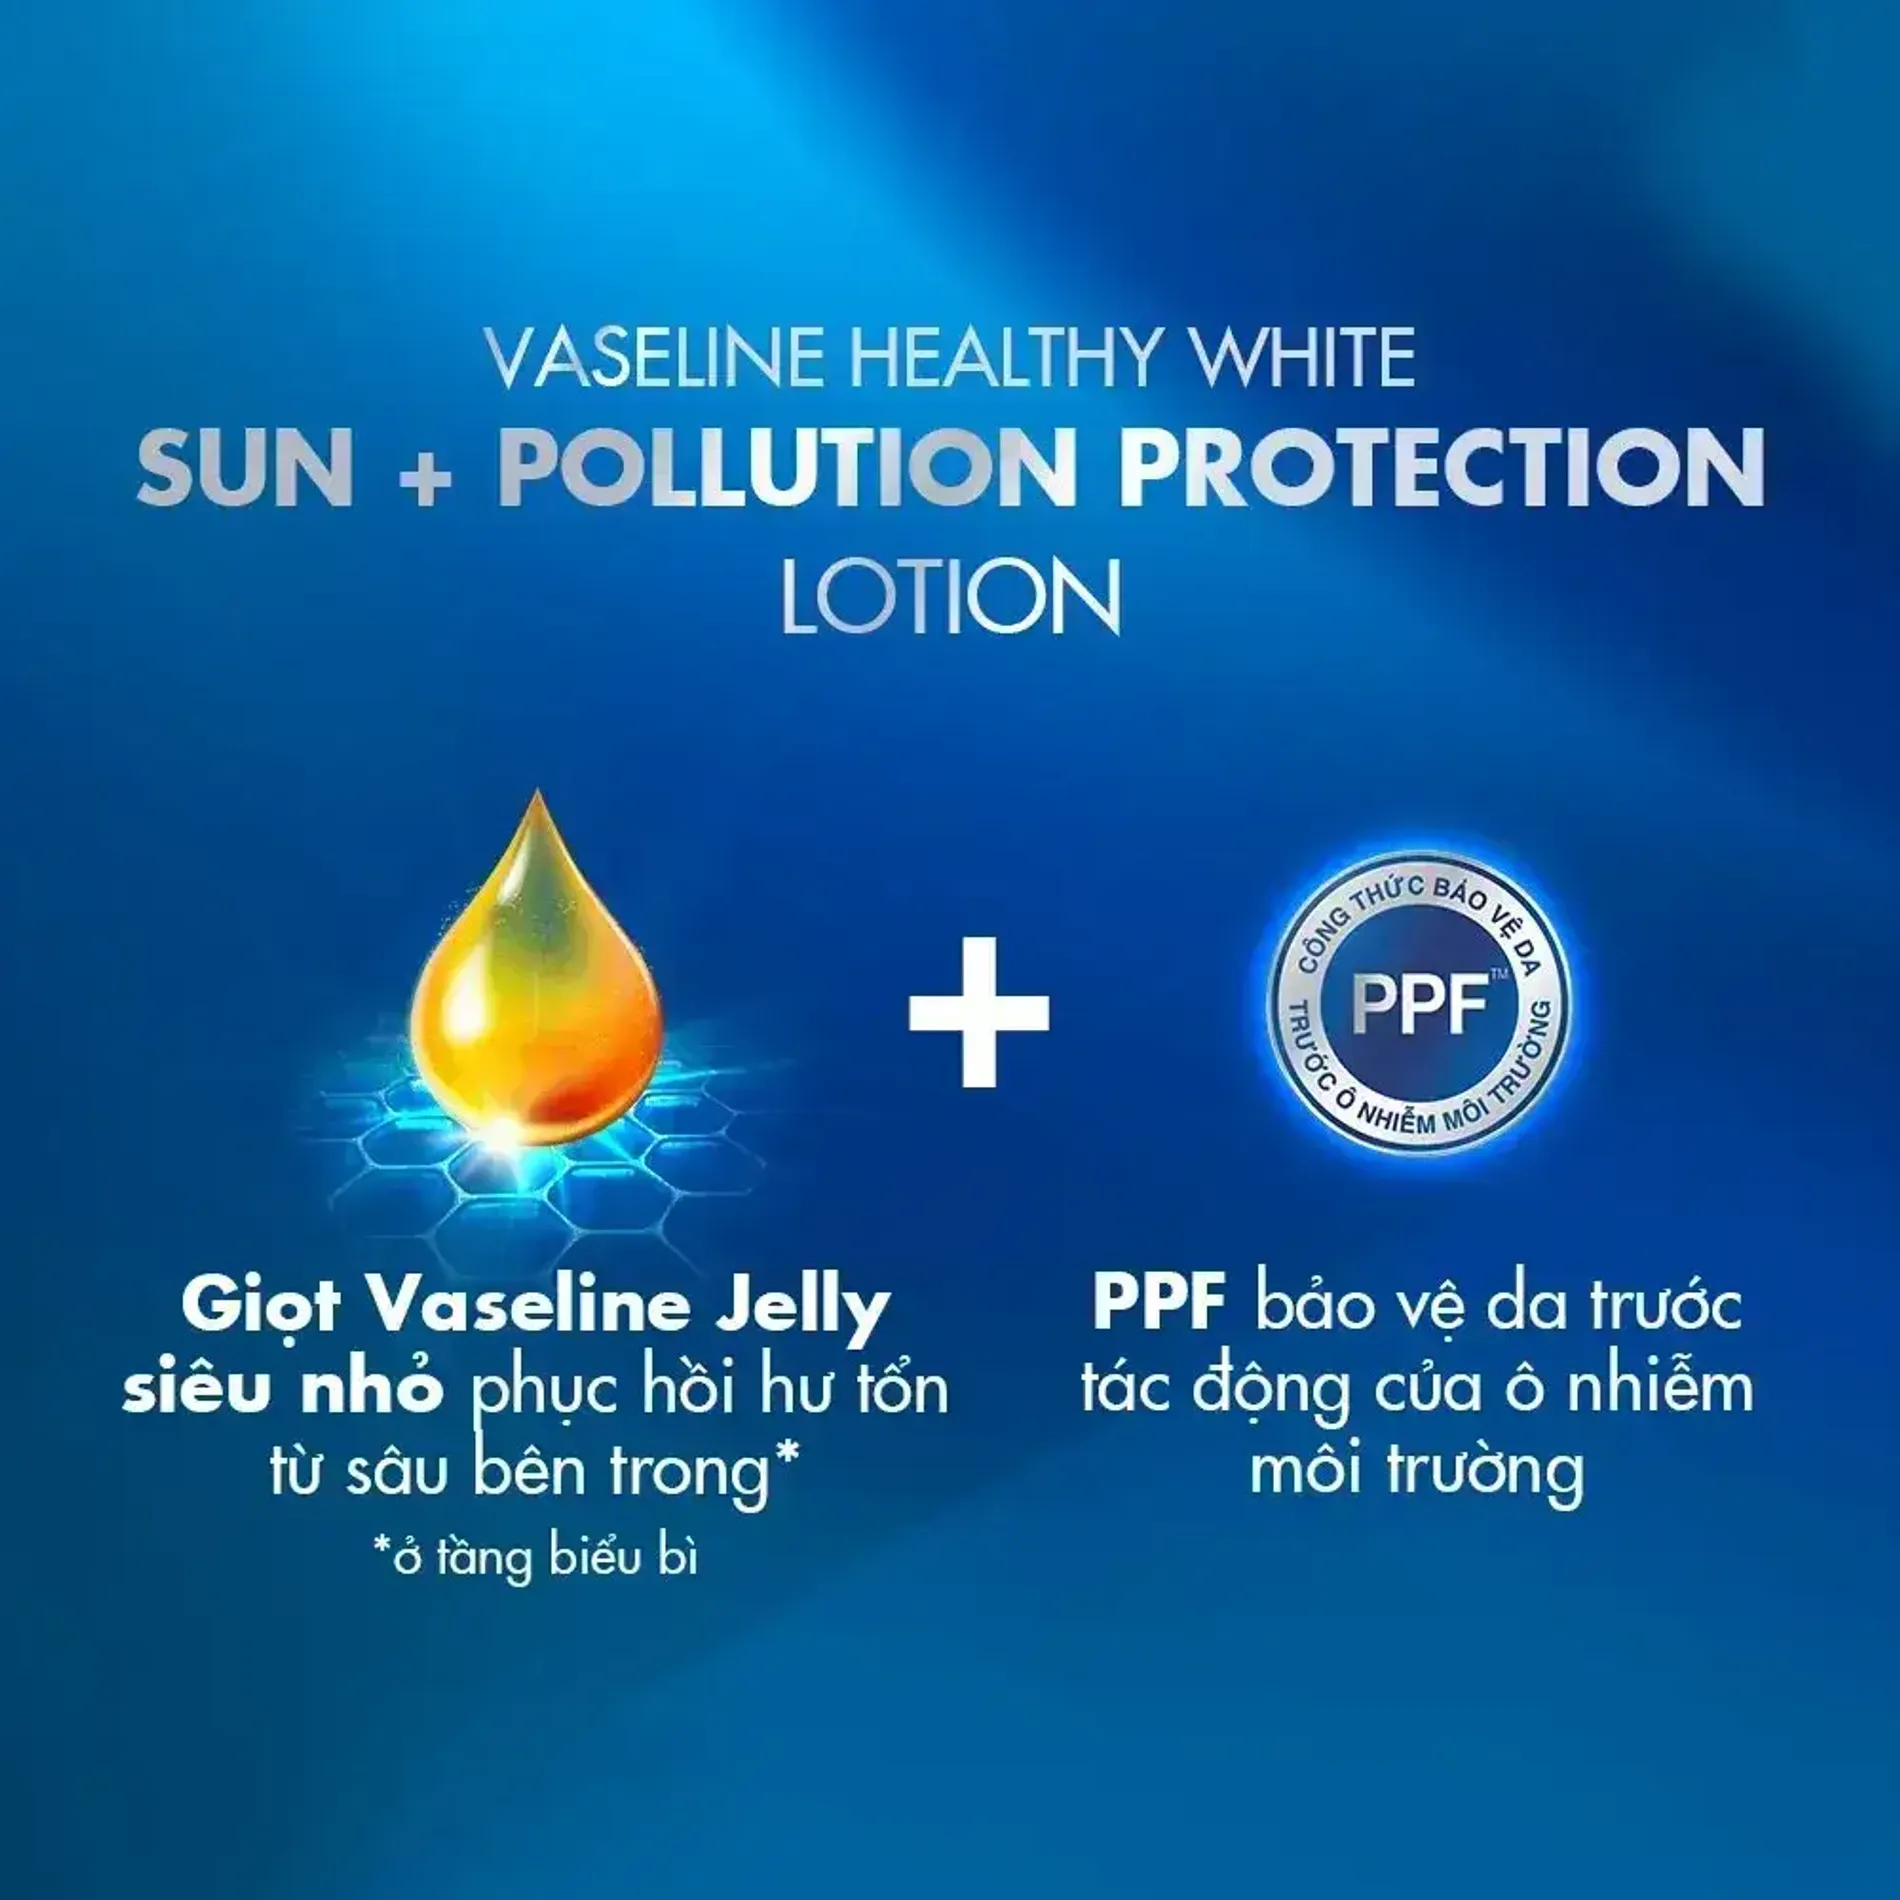 sua-duong-the-duong-trang-chong-nang-vaseline-healthy-white-sun-pollution-protection-spf24-pa-4